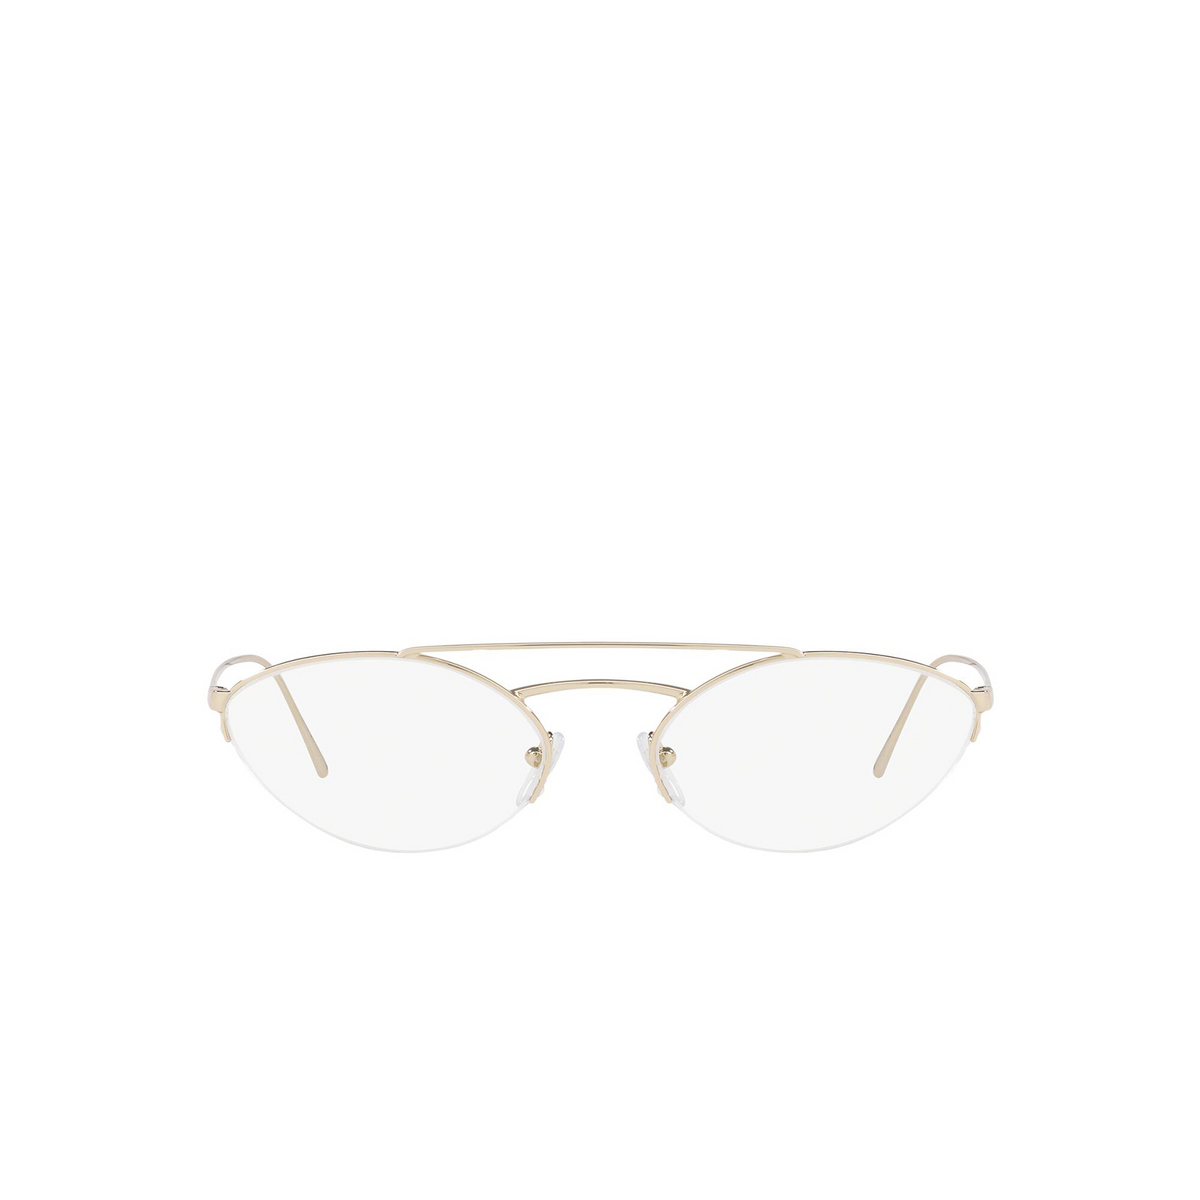 Prada CATWALK Eyeglasses ZVN1O1 Pale Gold - front view